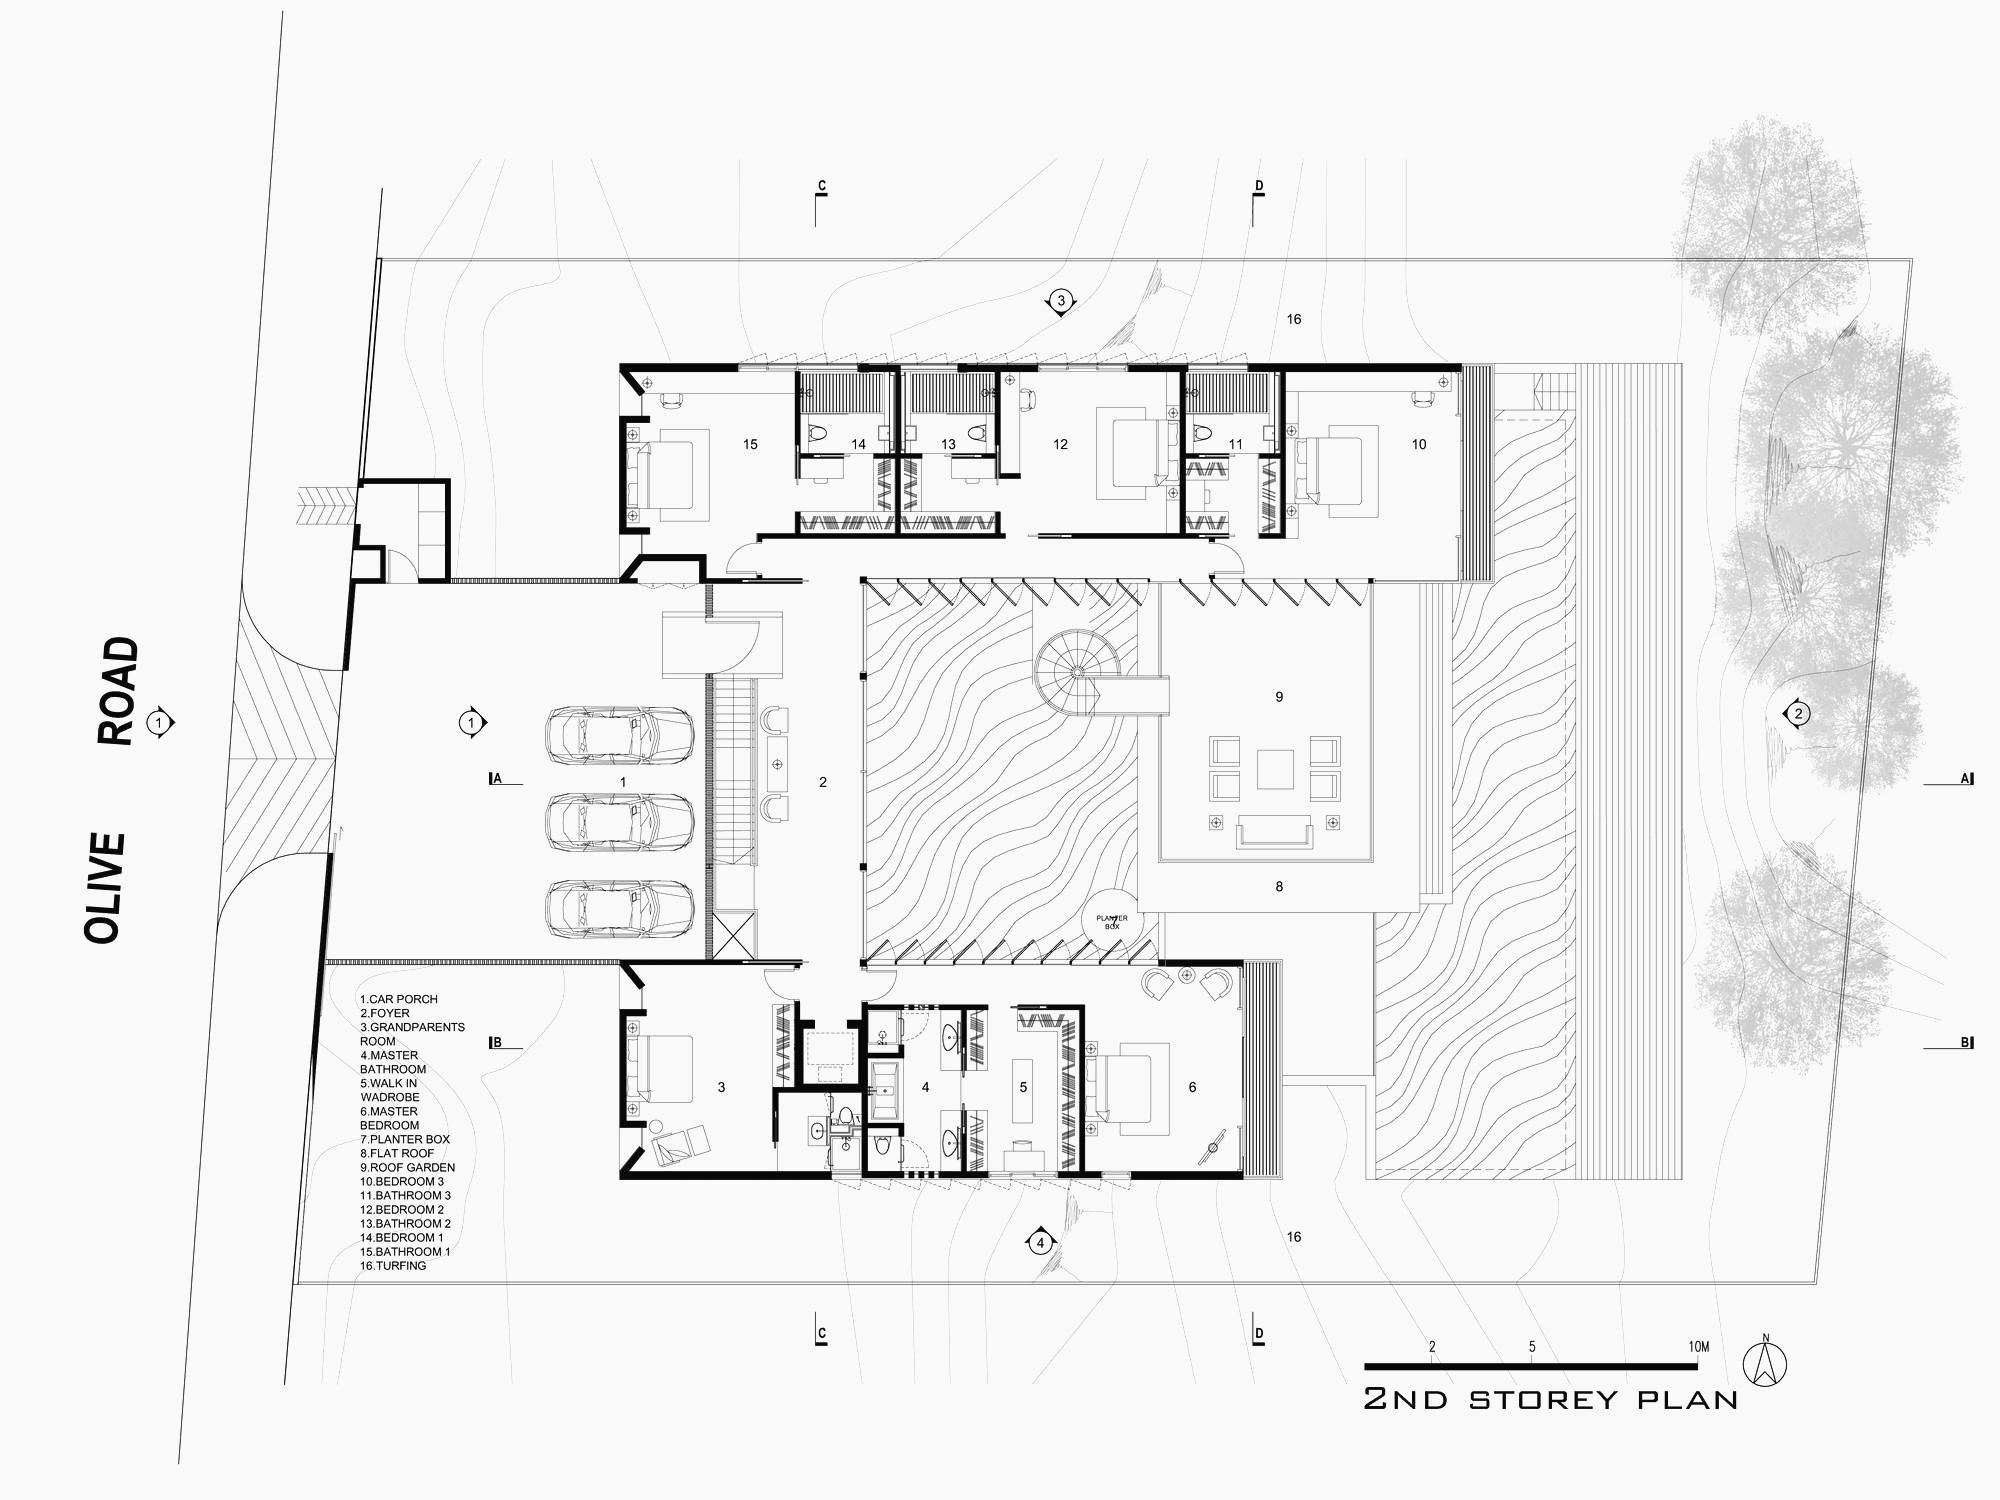 mega mansion floor plans beautiful blue bird house plans lovely estate home luxury floor 0d cute